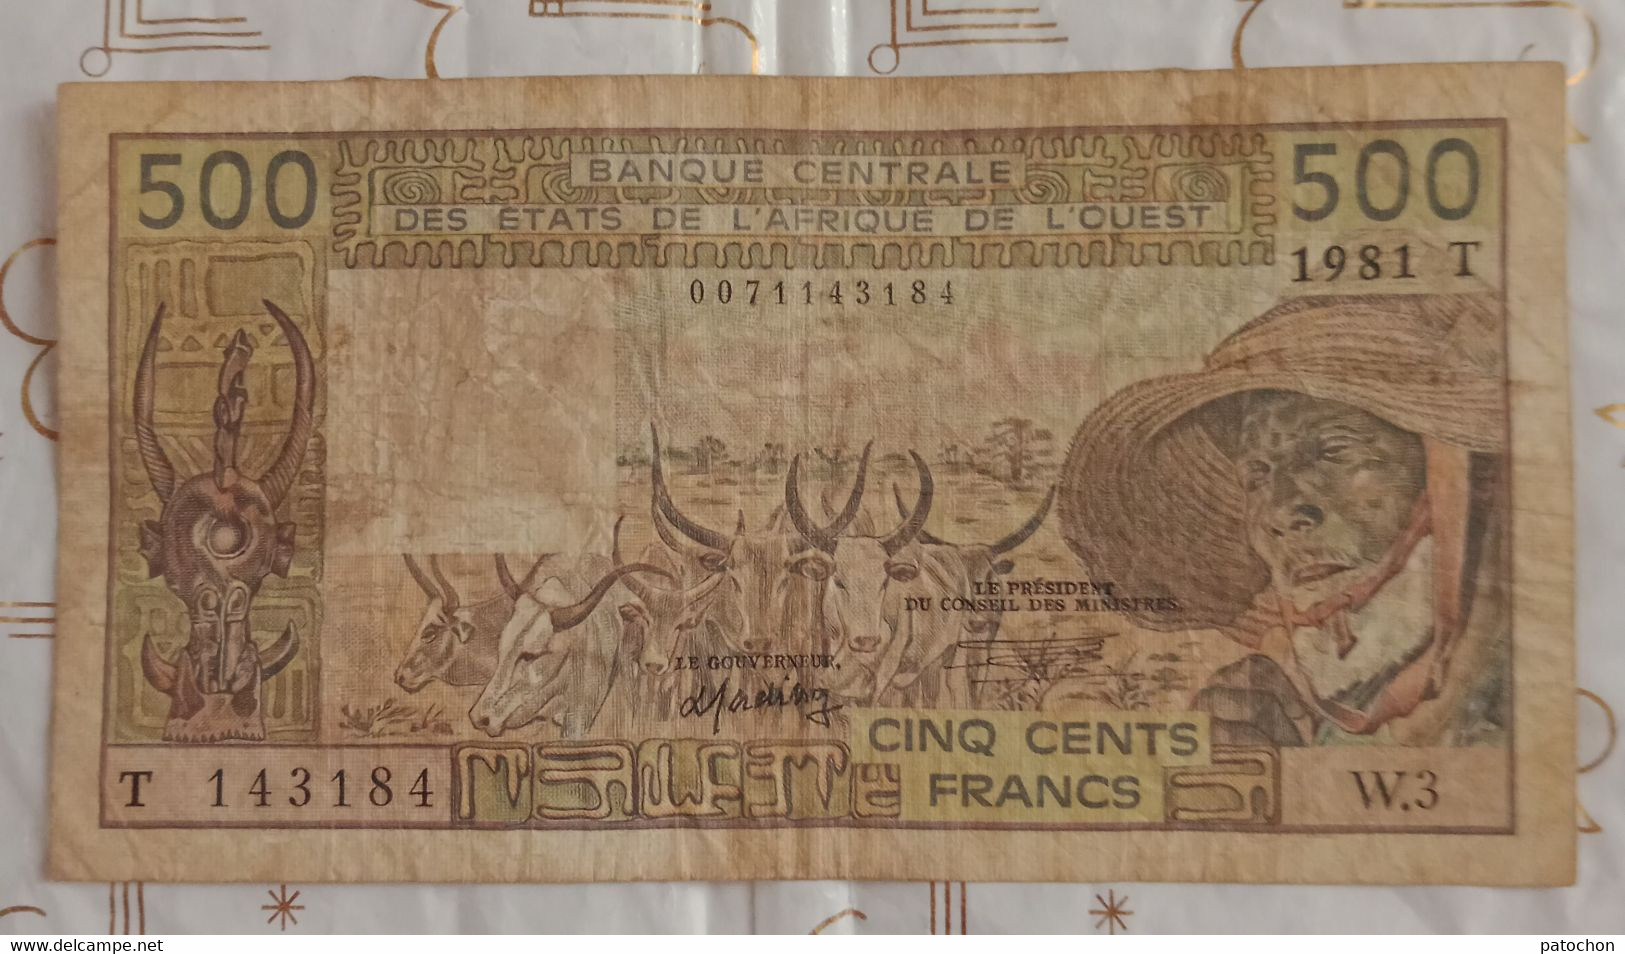 Billet 500 Francs BCEAO 1981 T N°143184 W.3 Colonies - Unclassified